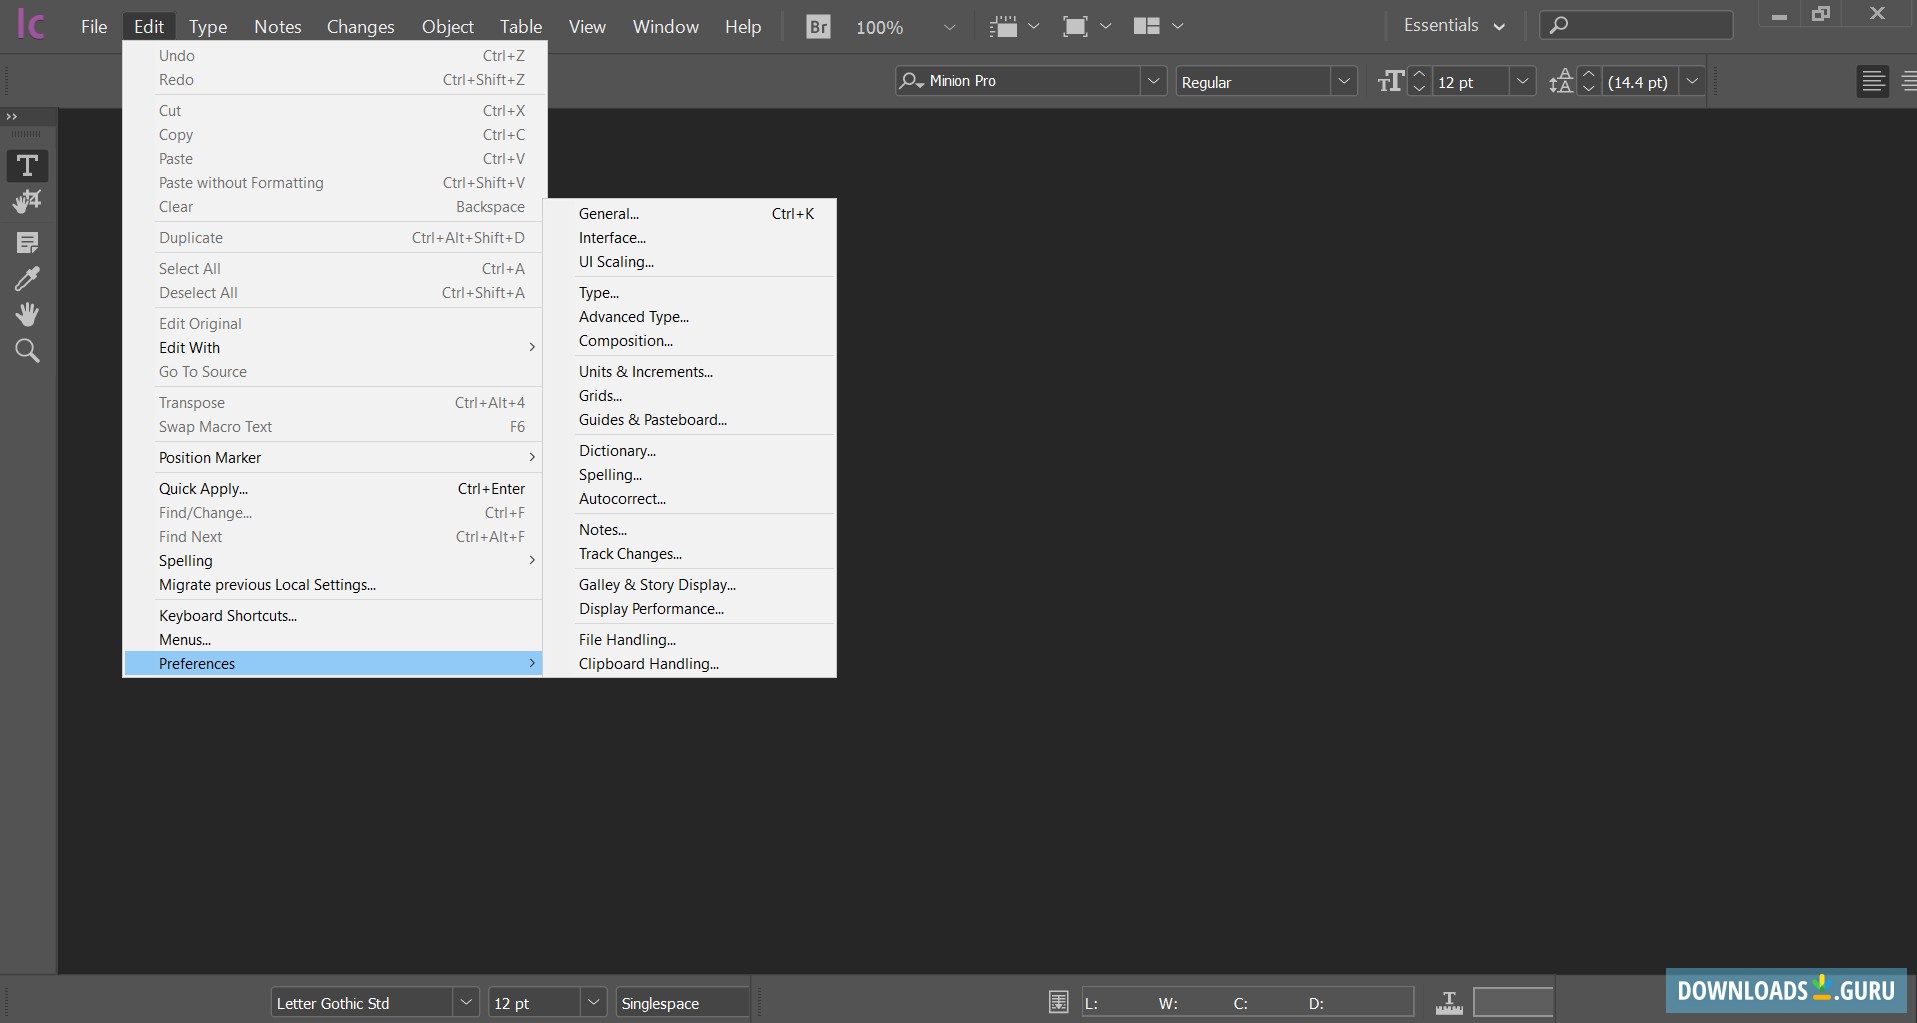 download the last version for ipod Adobe InCopy 2023 v18.5.0.57